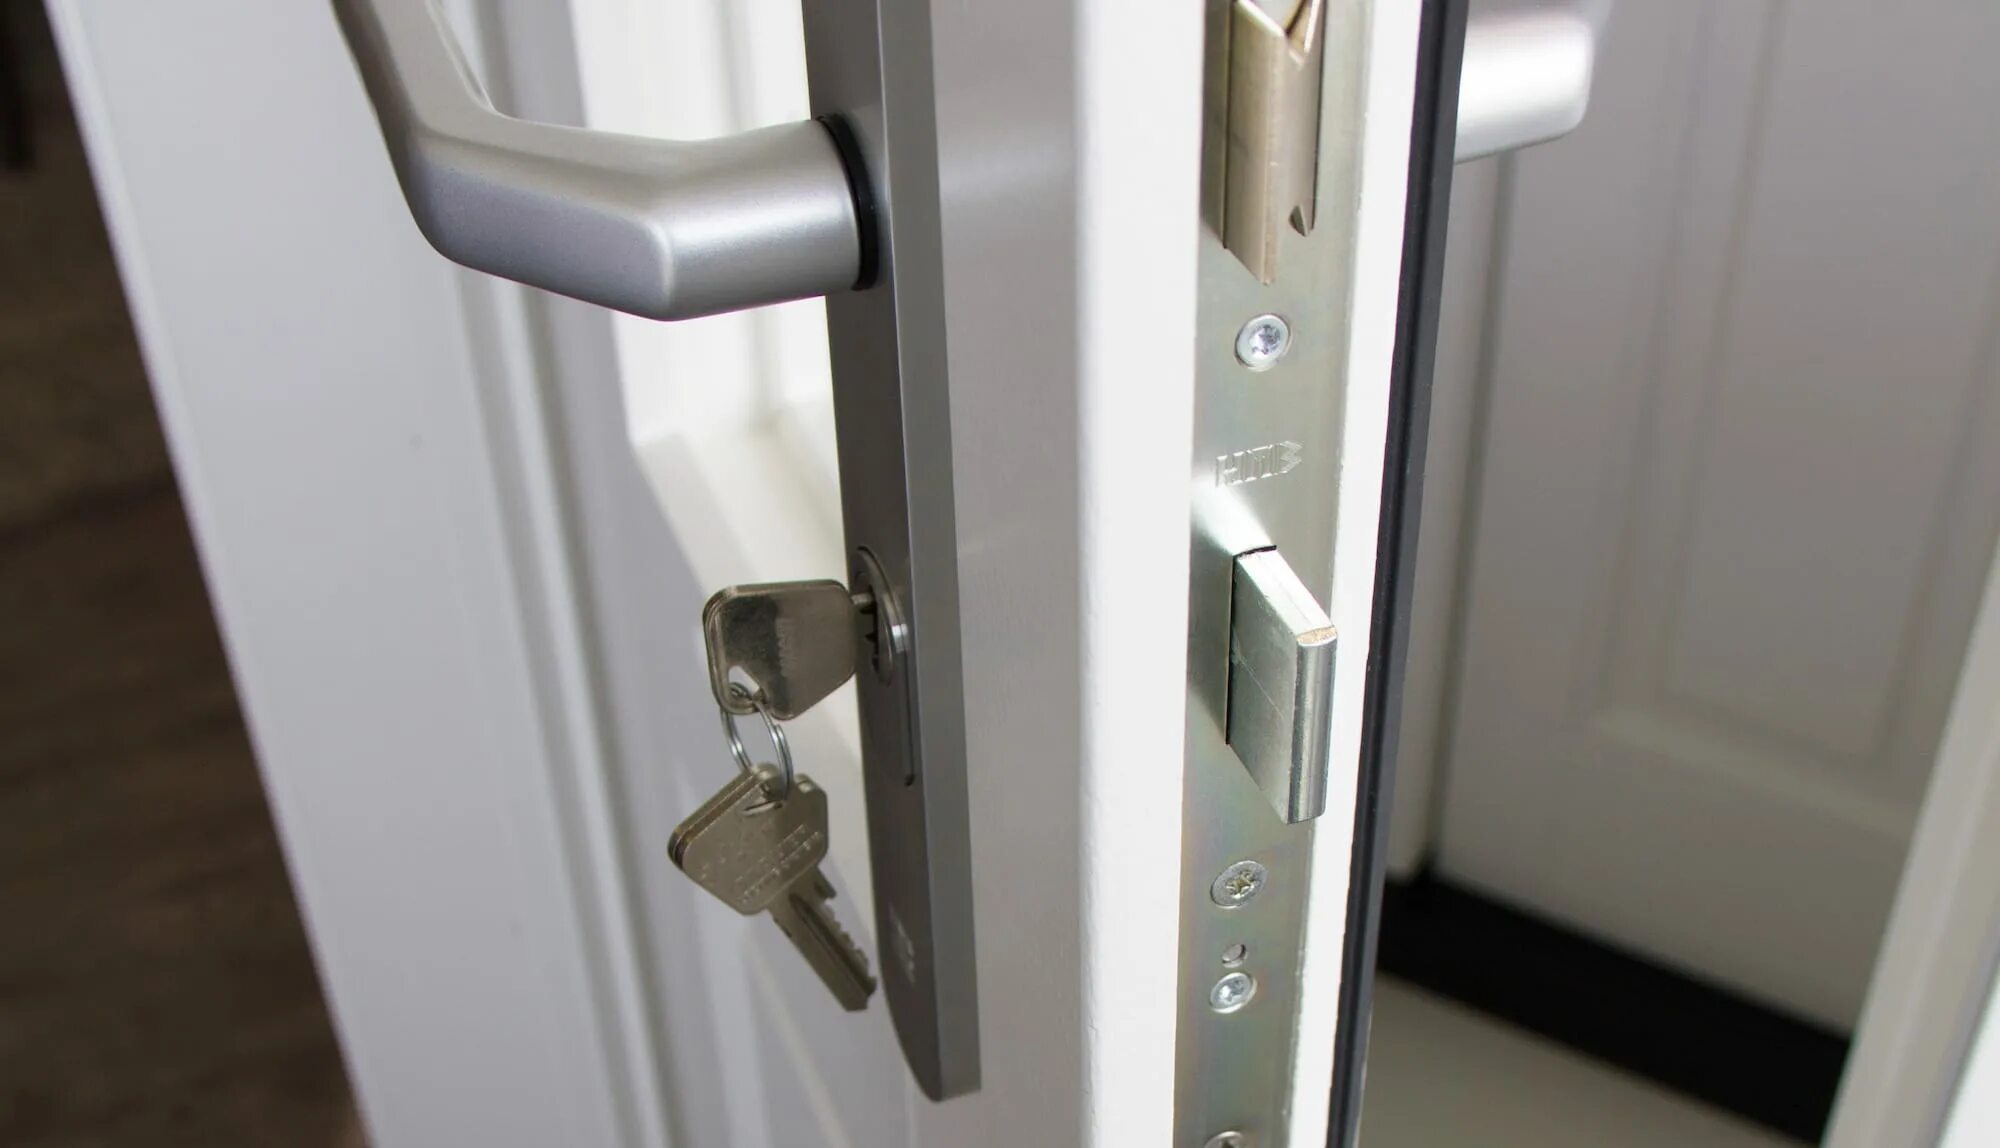 Противосъёмная система point Lock. Door Multipoint Locking Systems. Multi point Lock tlj018 Italy Door. Security Lockdown Door.